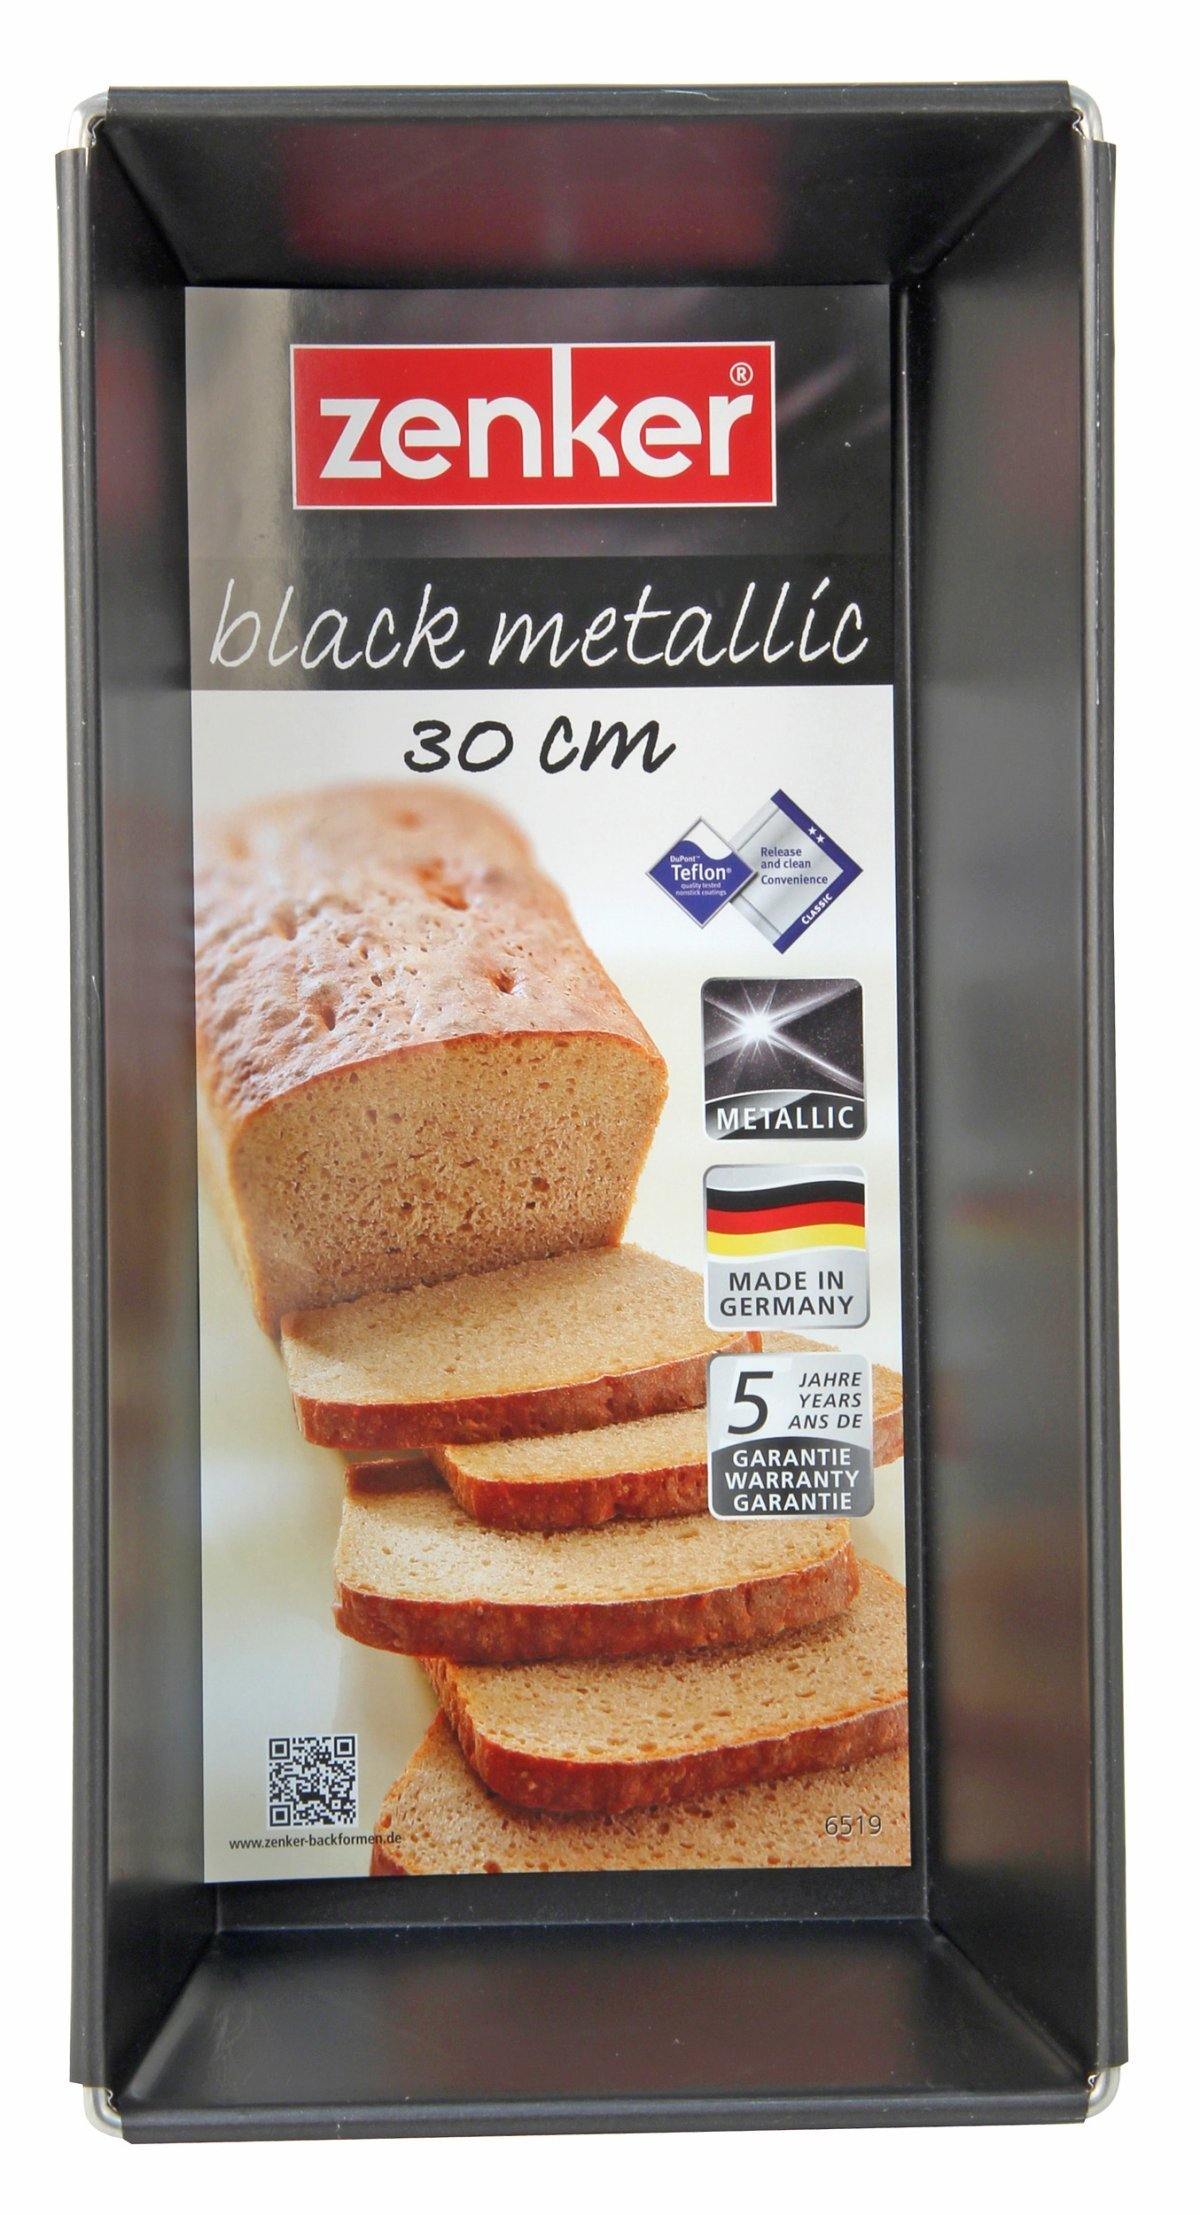 Zenker  "Black/Metallic" Bread Baking Tin, 31X16X10 cm - Whole and All